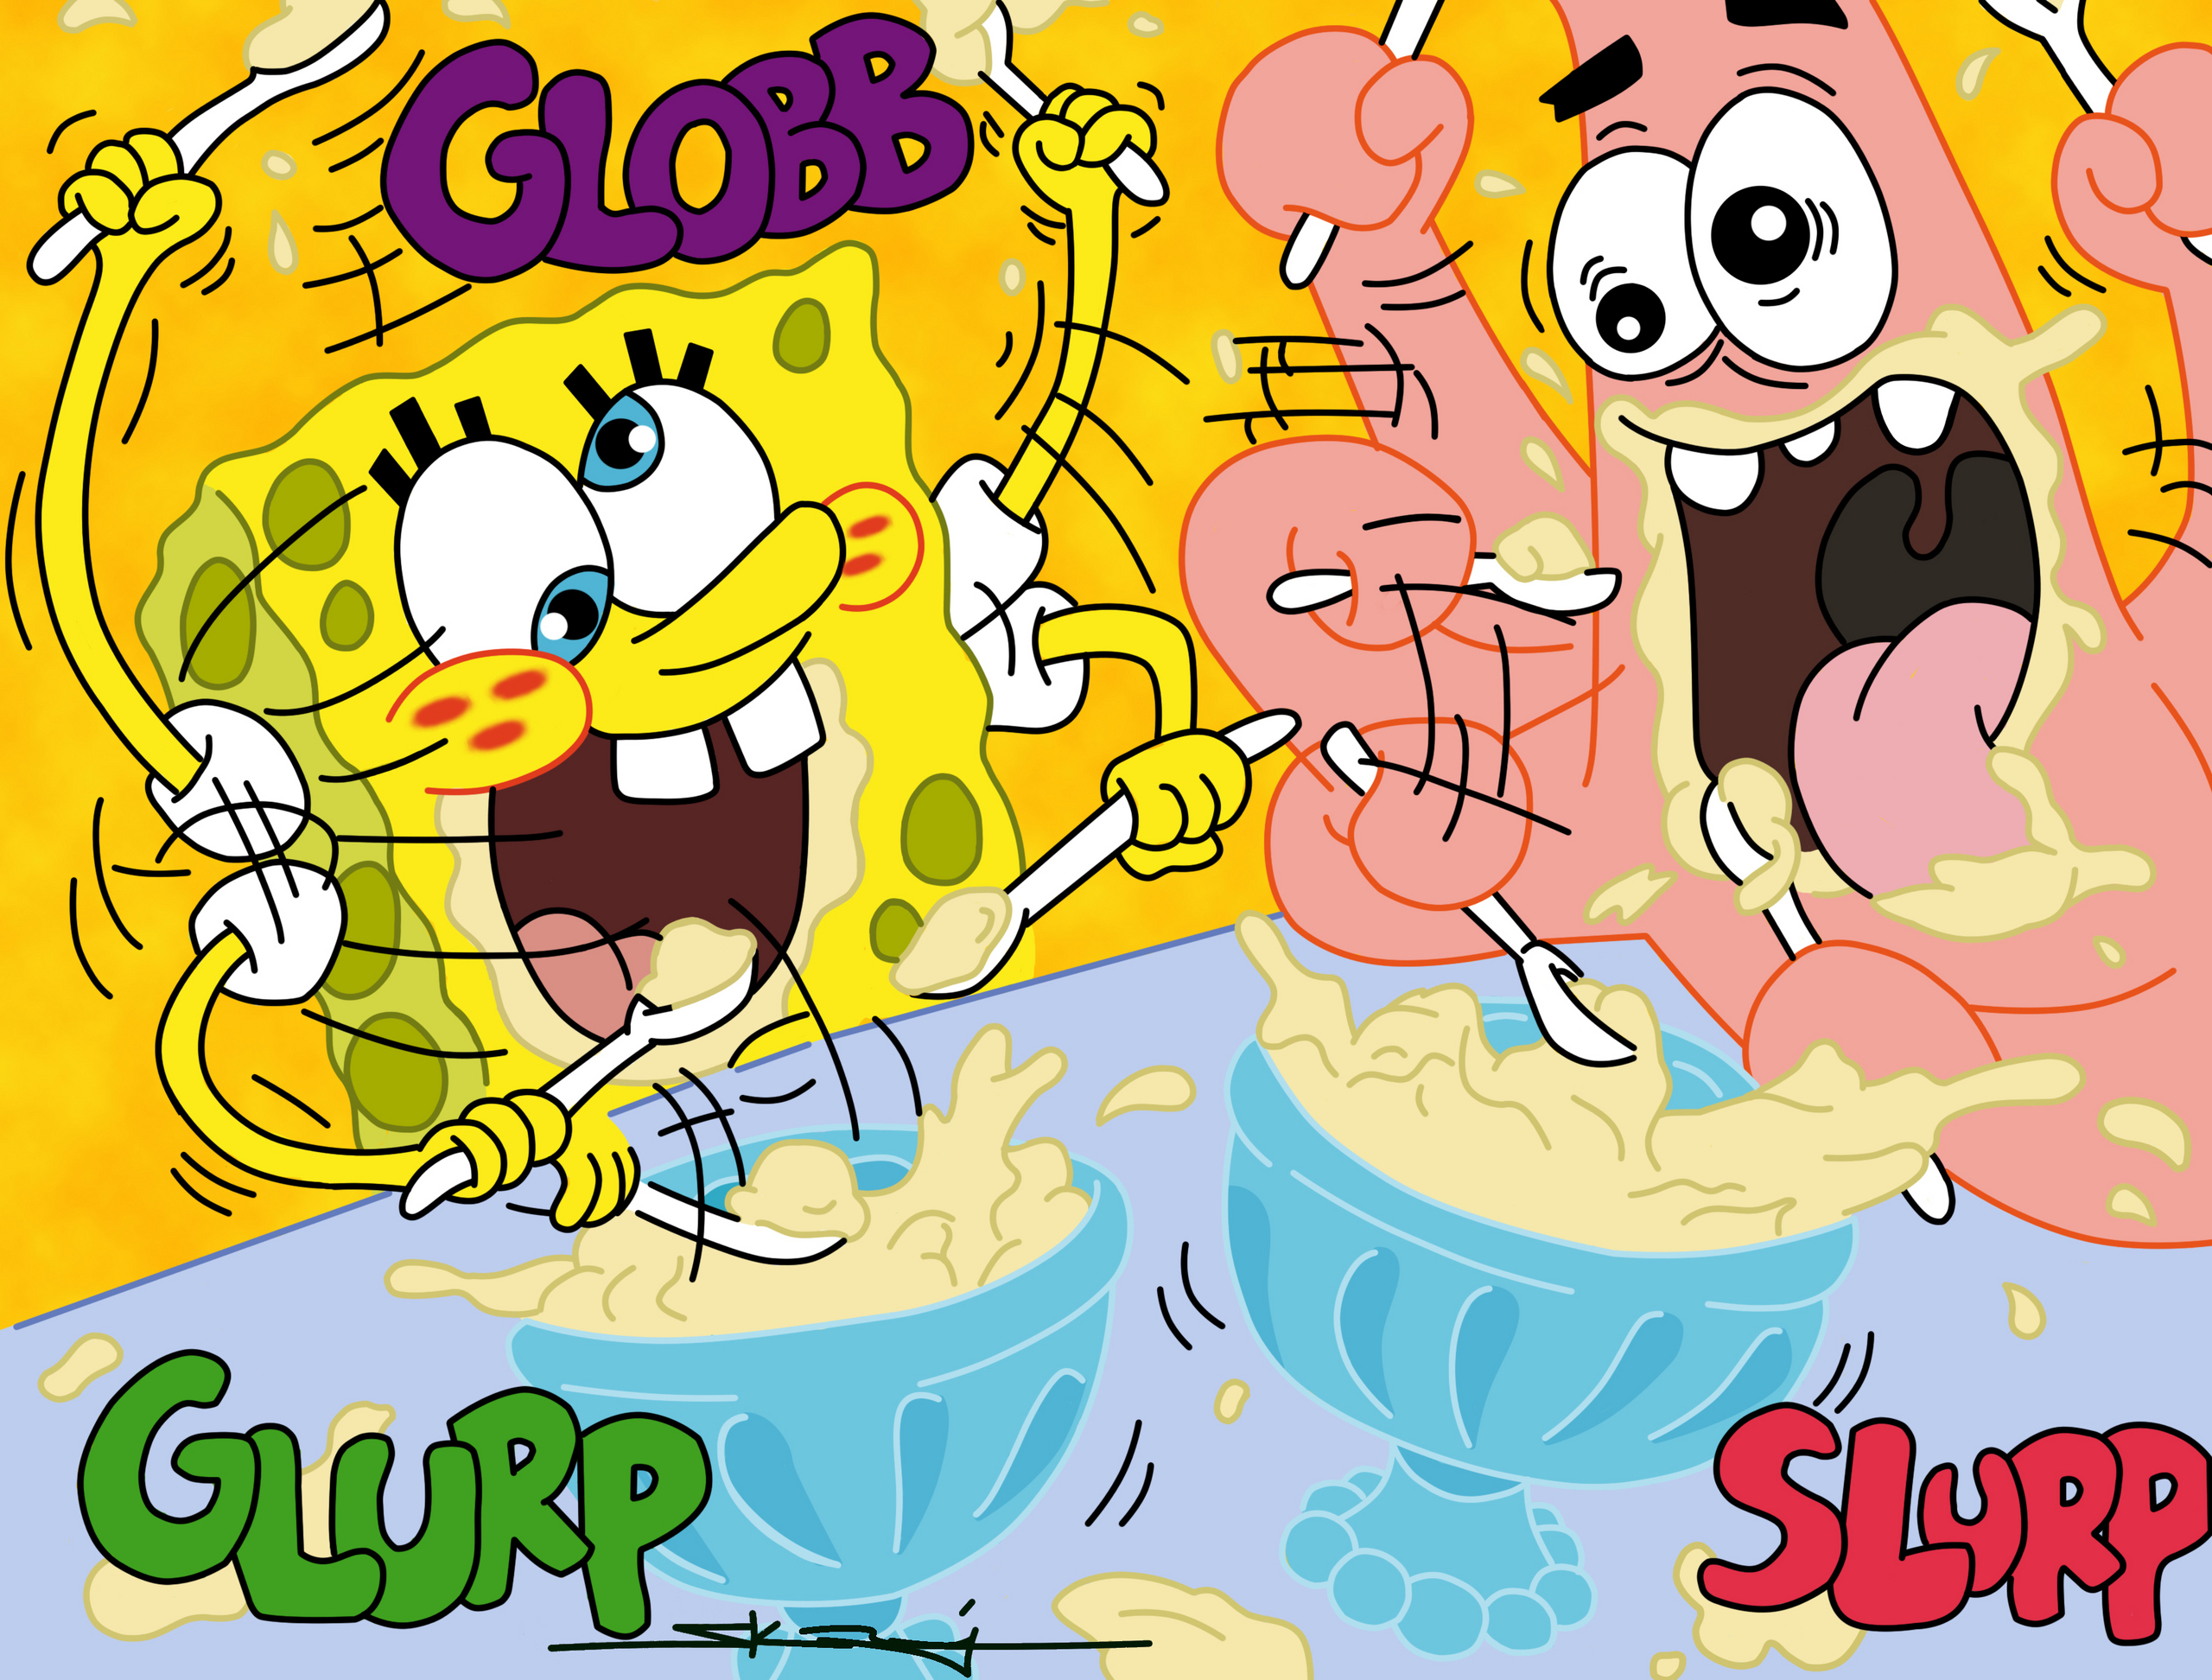 Spongebob Squarepants Image And Patrick Wallpaper Photos